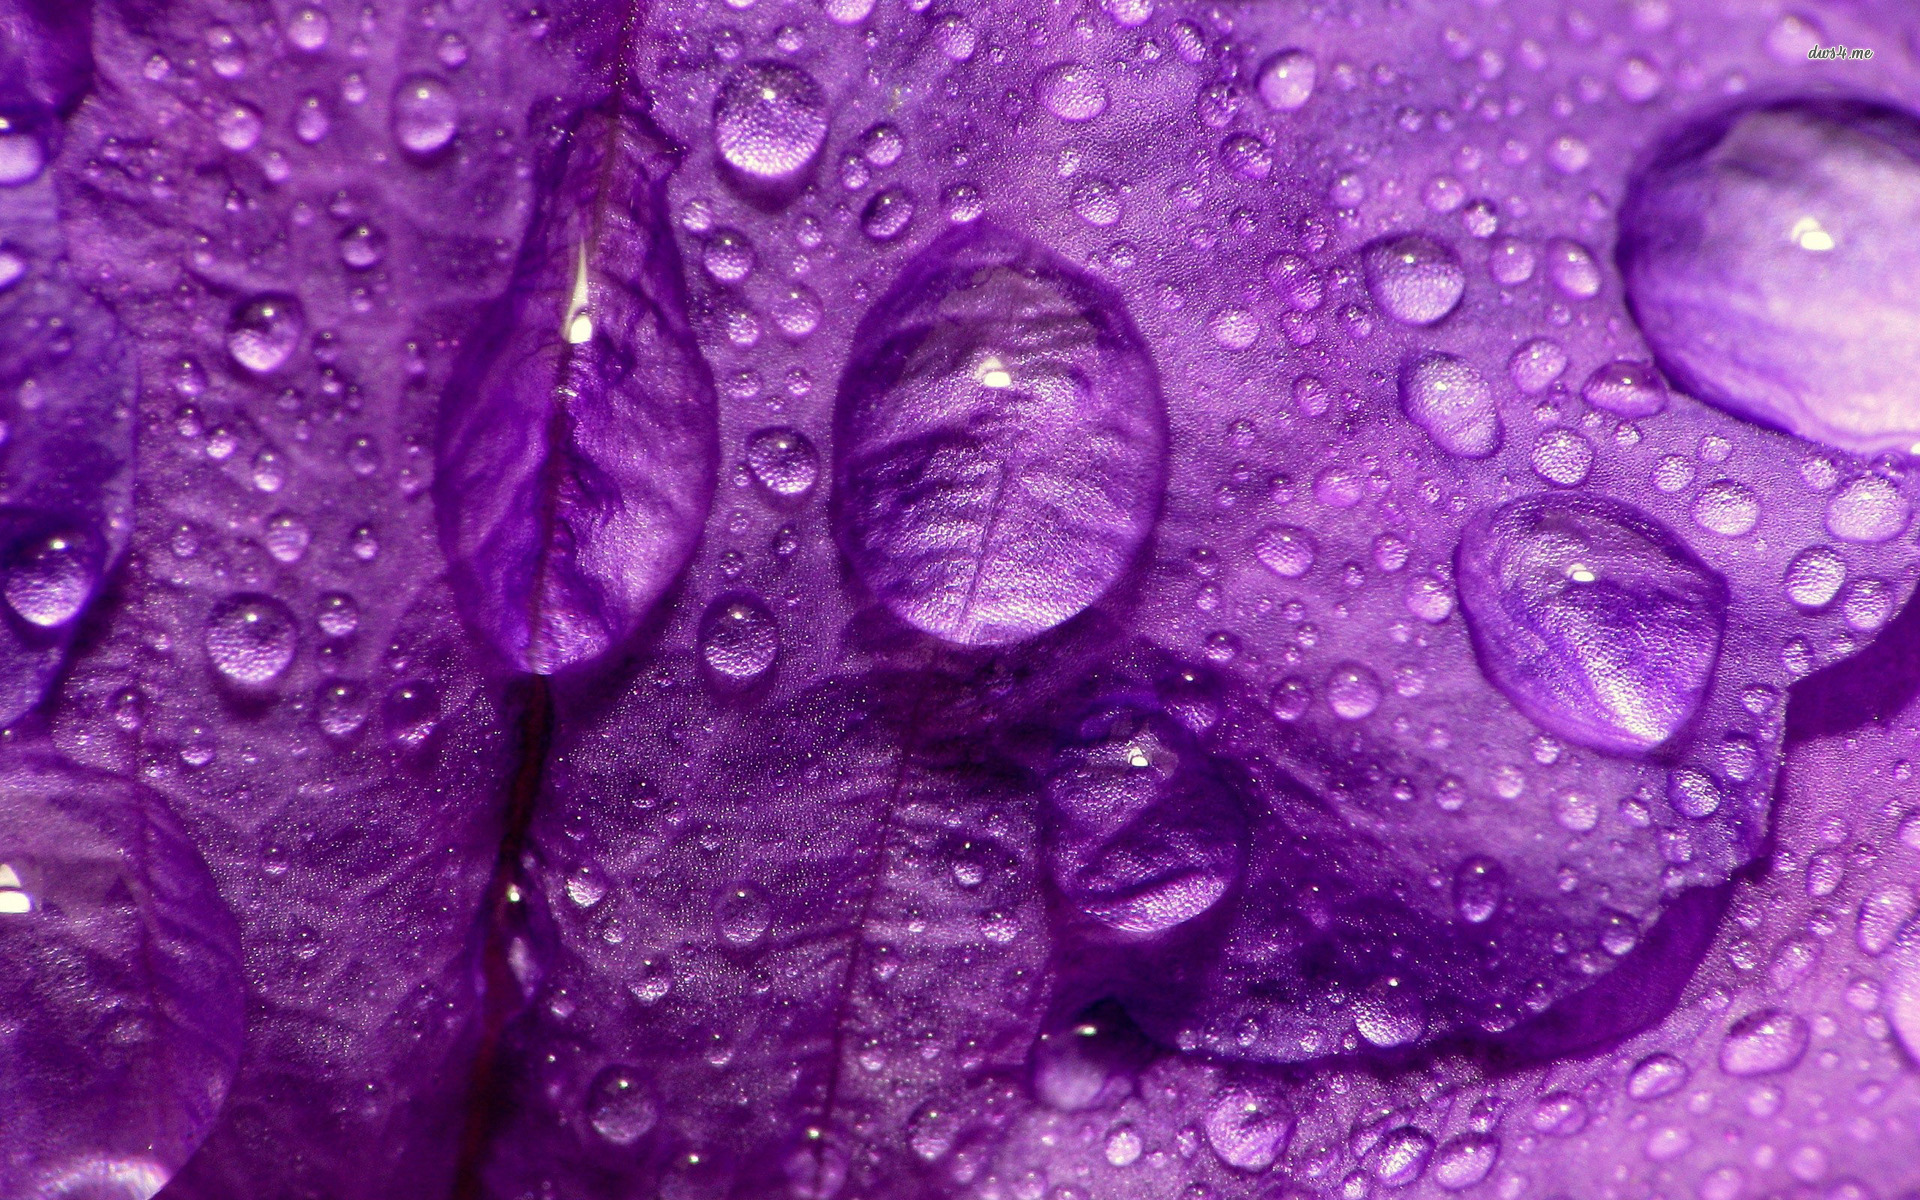 Rain drops on purple petals wallpaper - Flower wallpapers - #14922